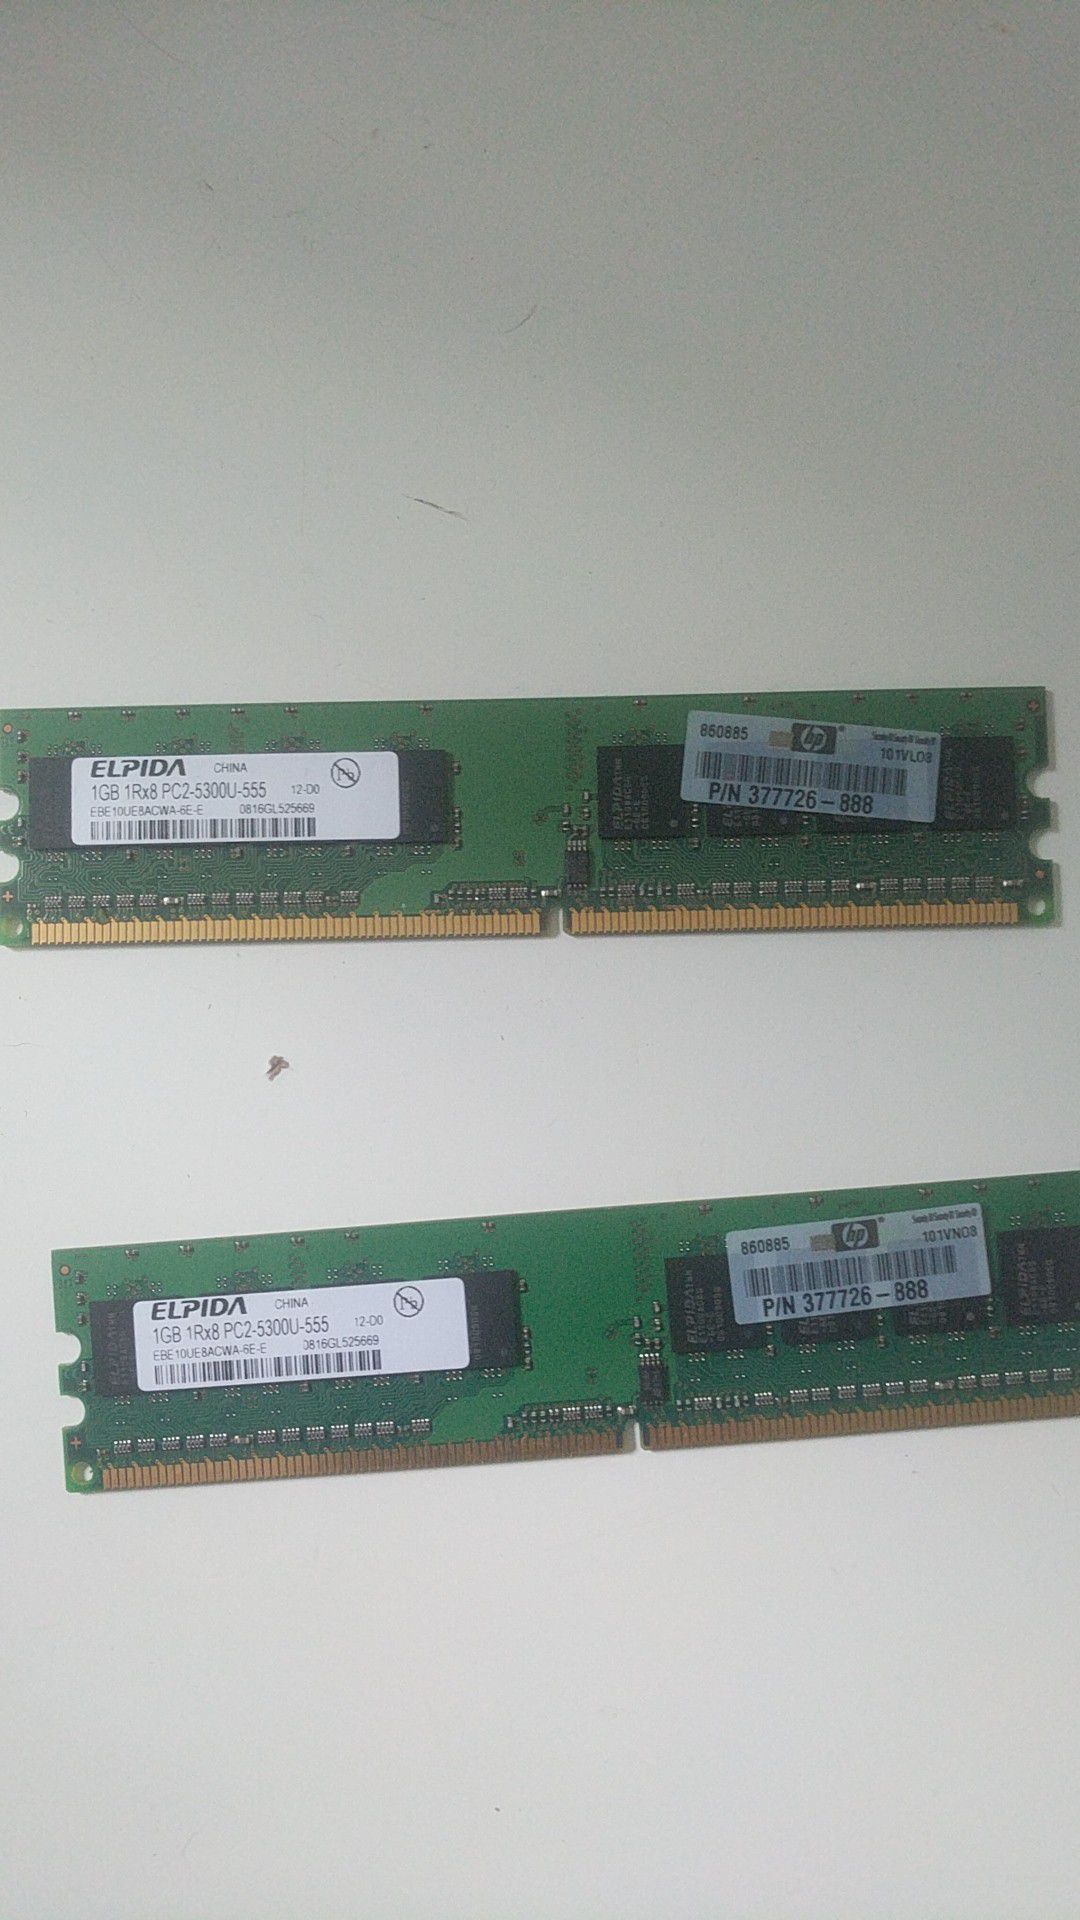 2 1GB RAM sticks